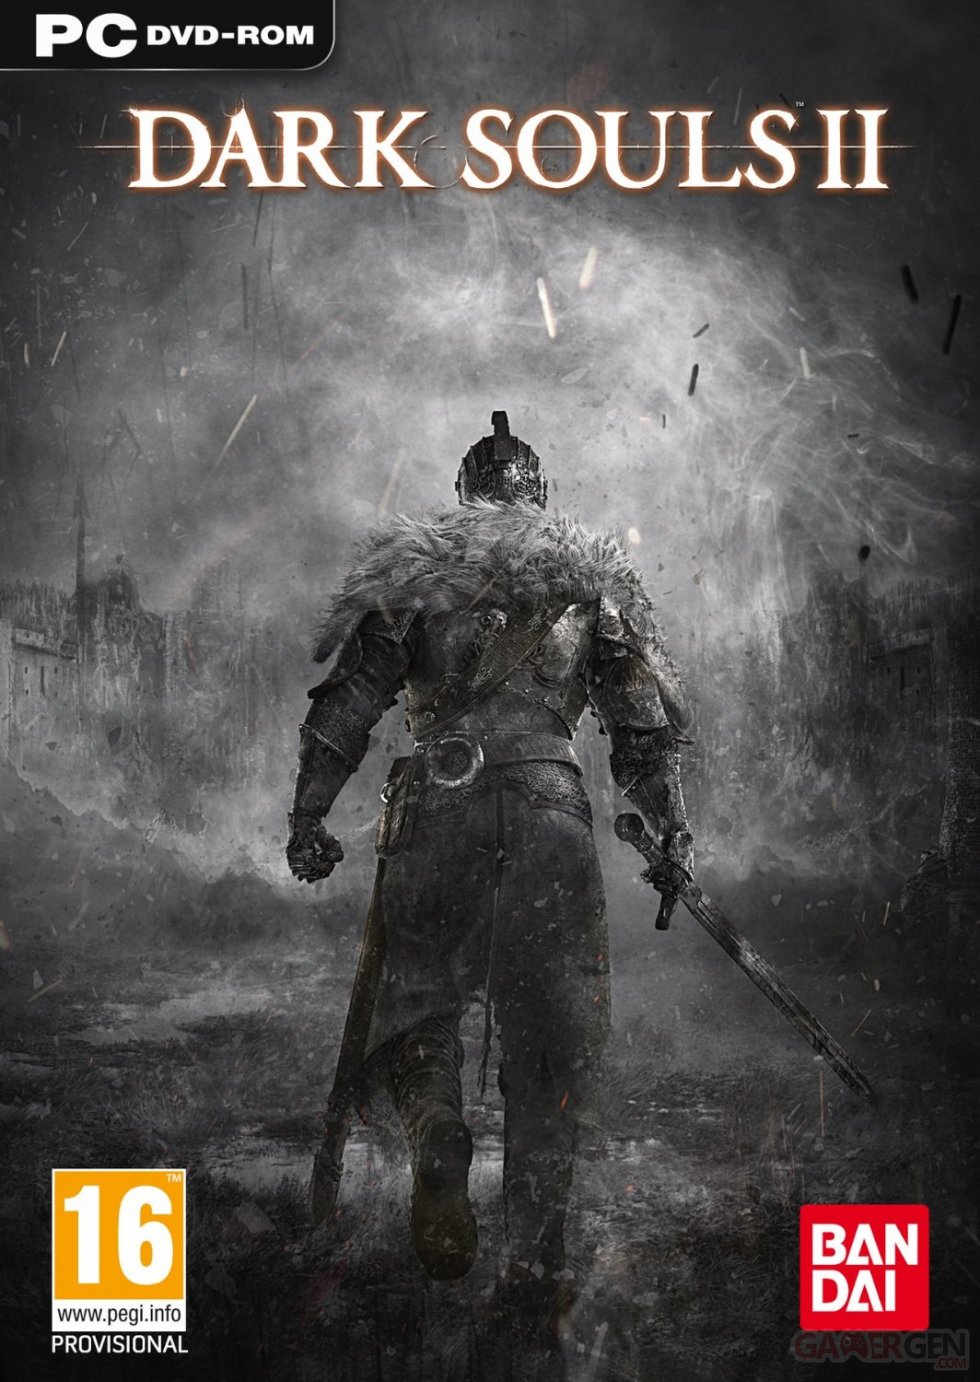 Dark Souls II jaquette PC 11.03.2014  (2)